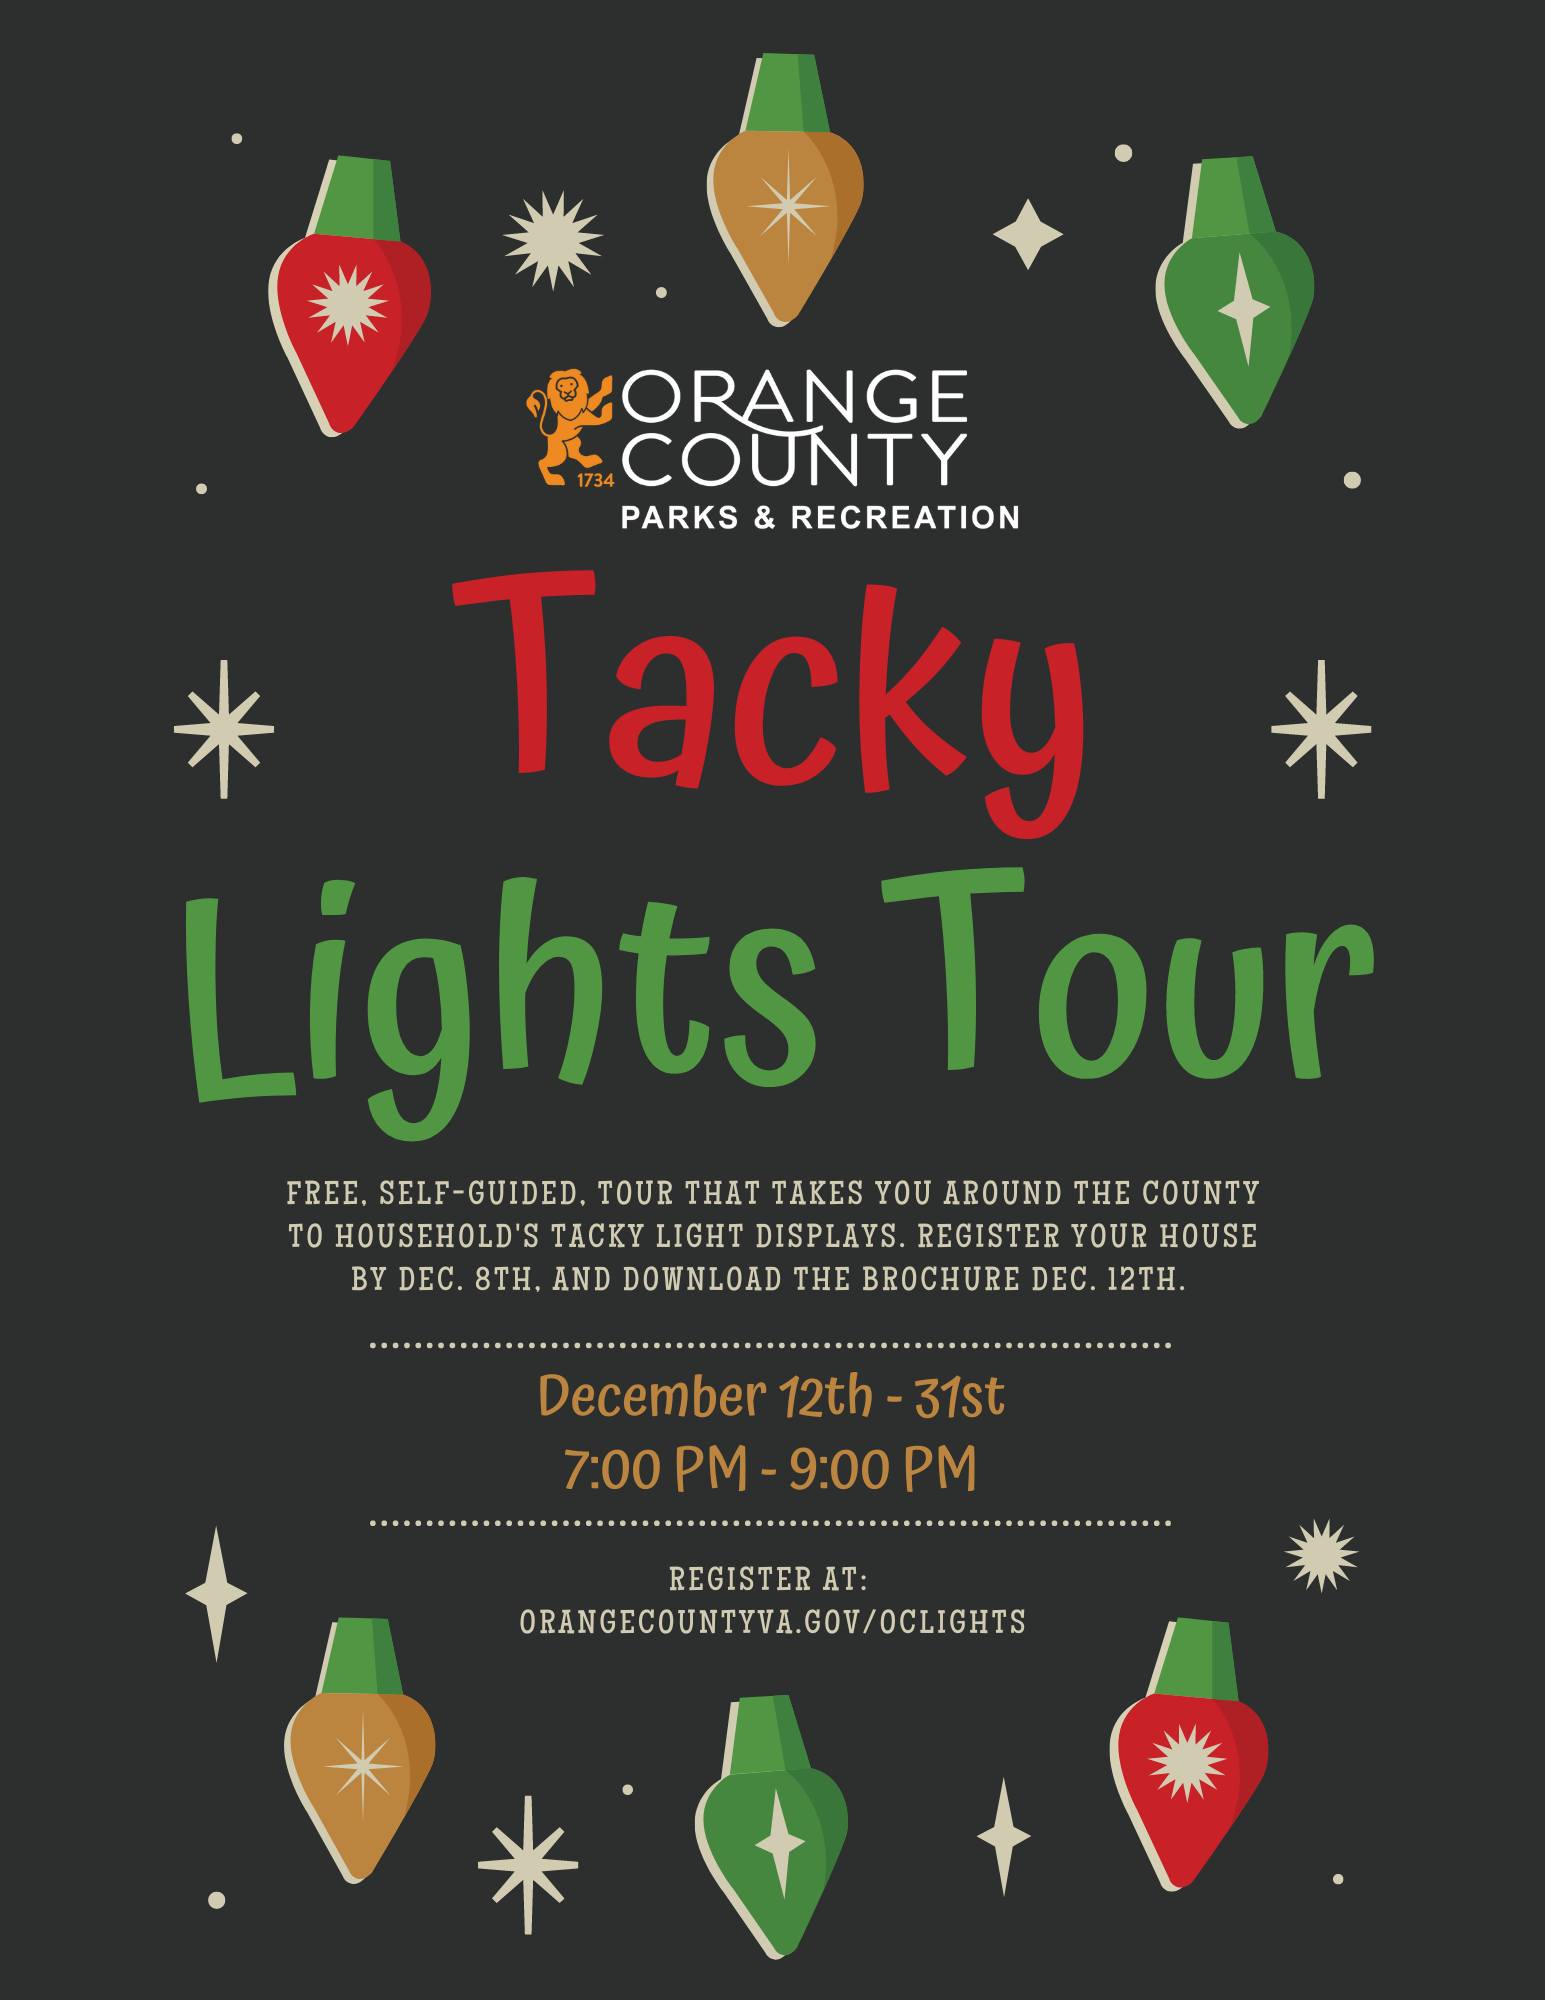 Orange County, Virginia is your Holiday Headquarters! · Visit Orange